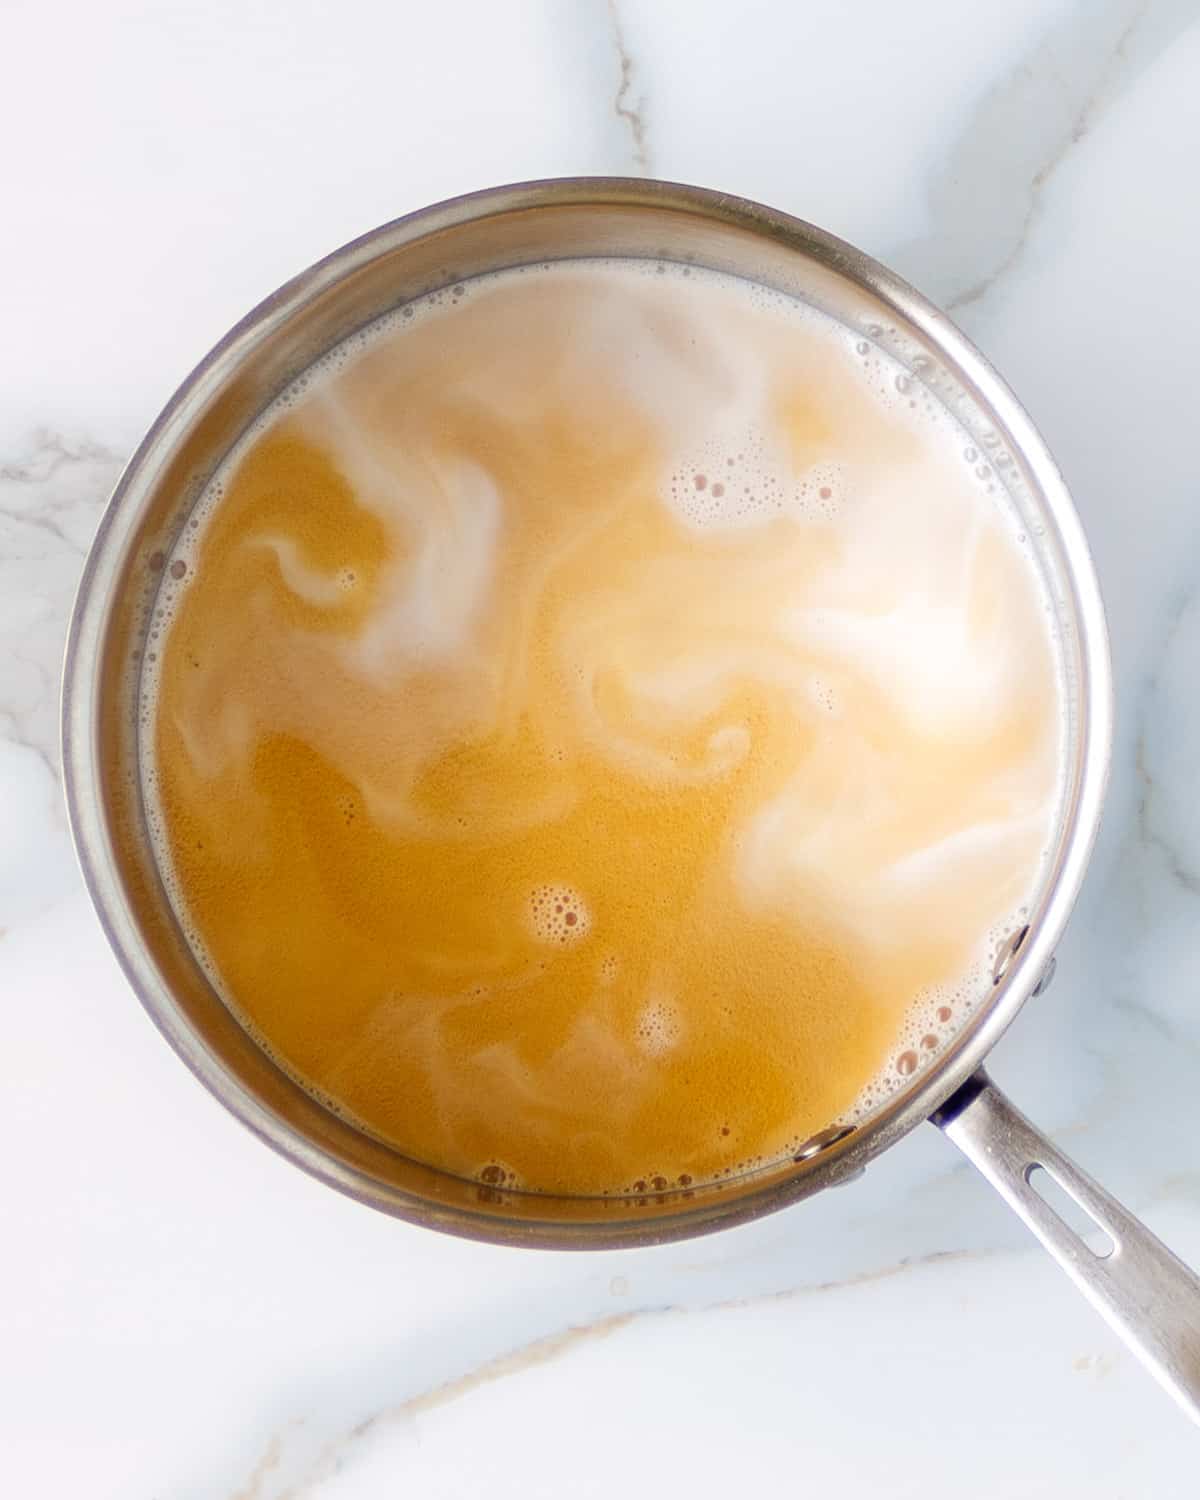 Pan of spiced tea swirled with macadamia nut milk.